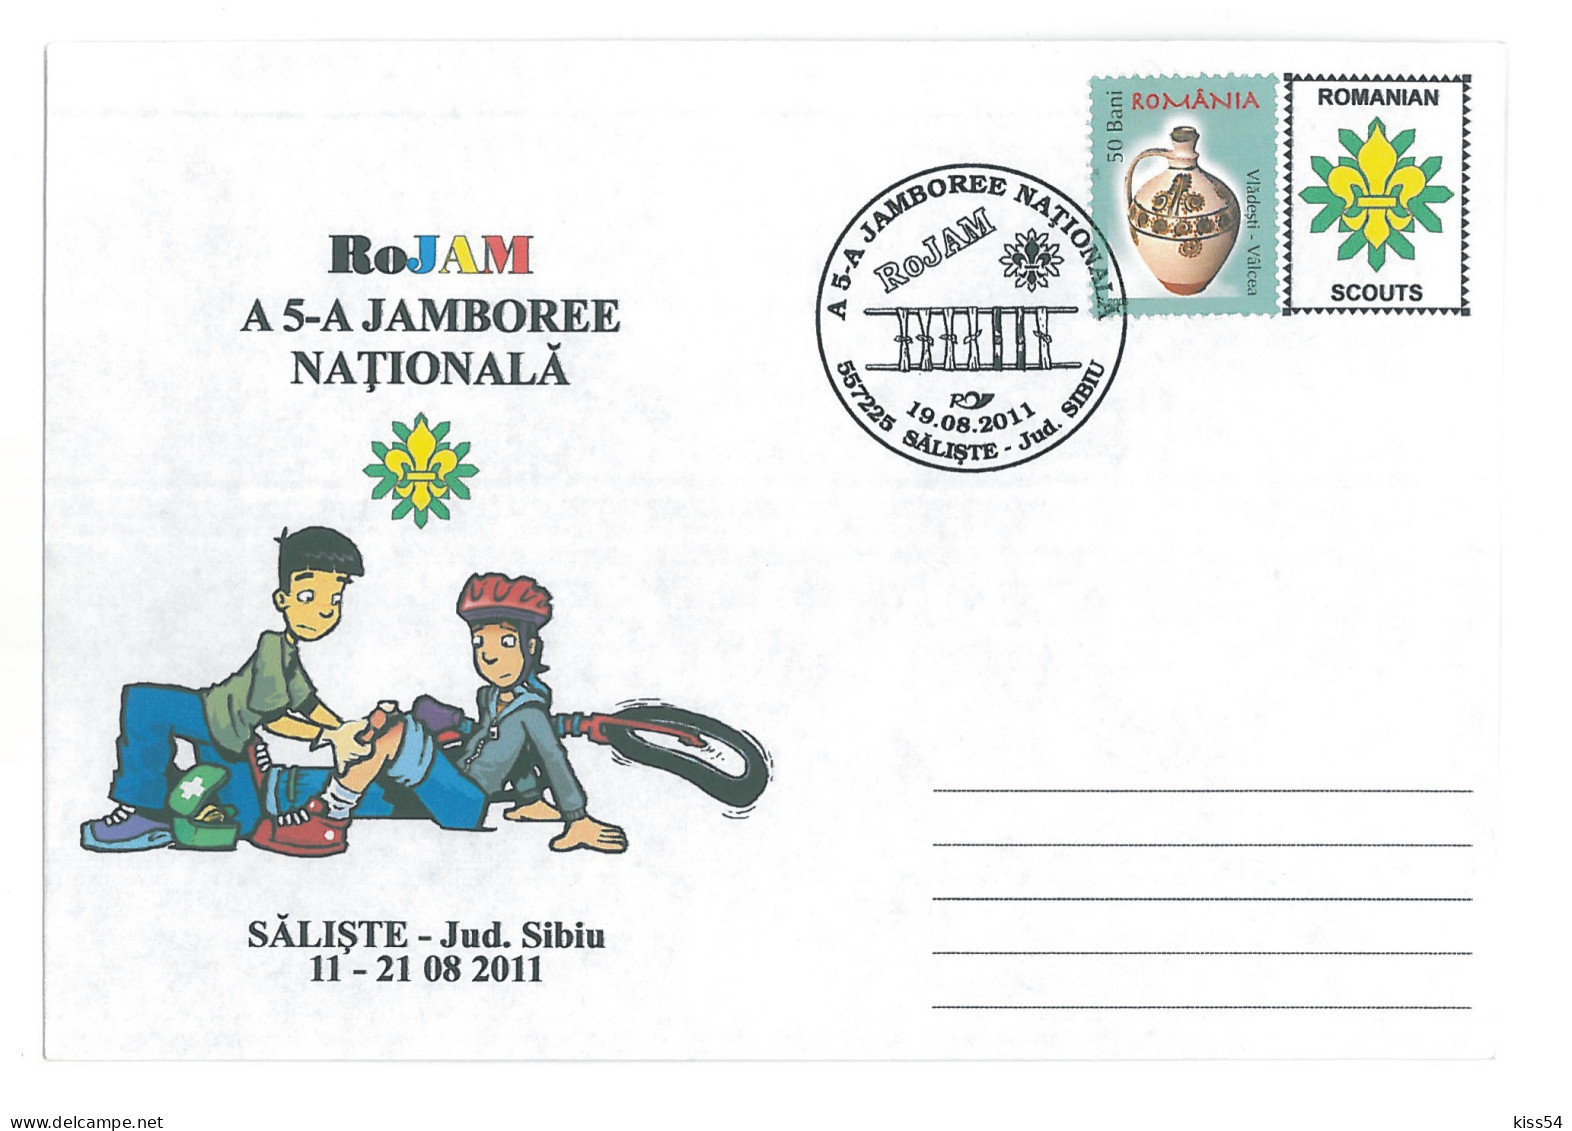 SC 46 - 1304 Scout ROMANIA, National Jamboree - Cover - Used - 2011 - Briefe U. Dokumente